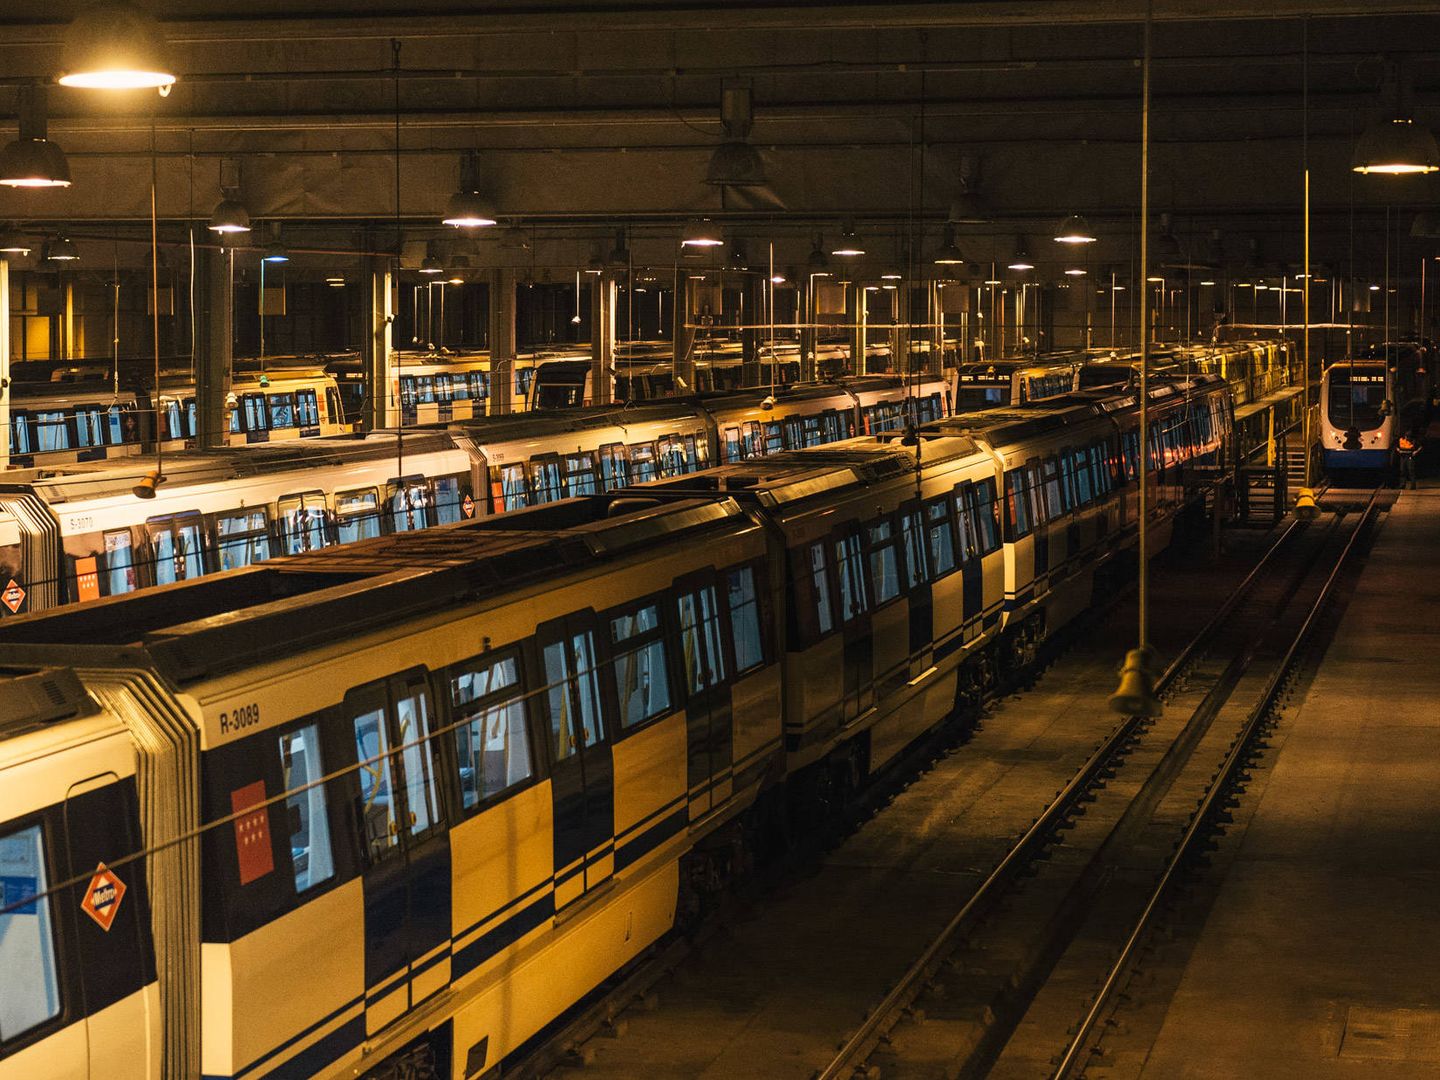 Cocheras de Metro de Madrid. (P.L.Learte)